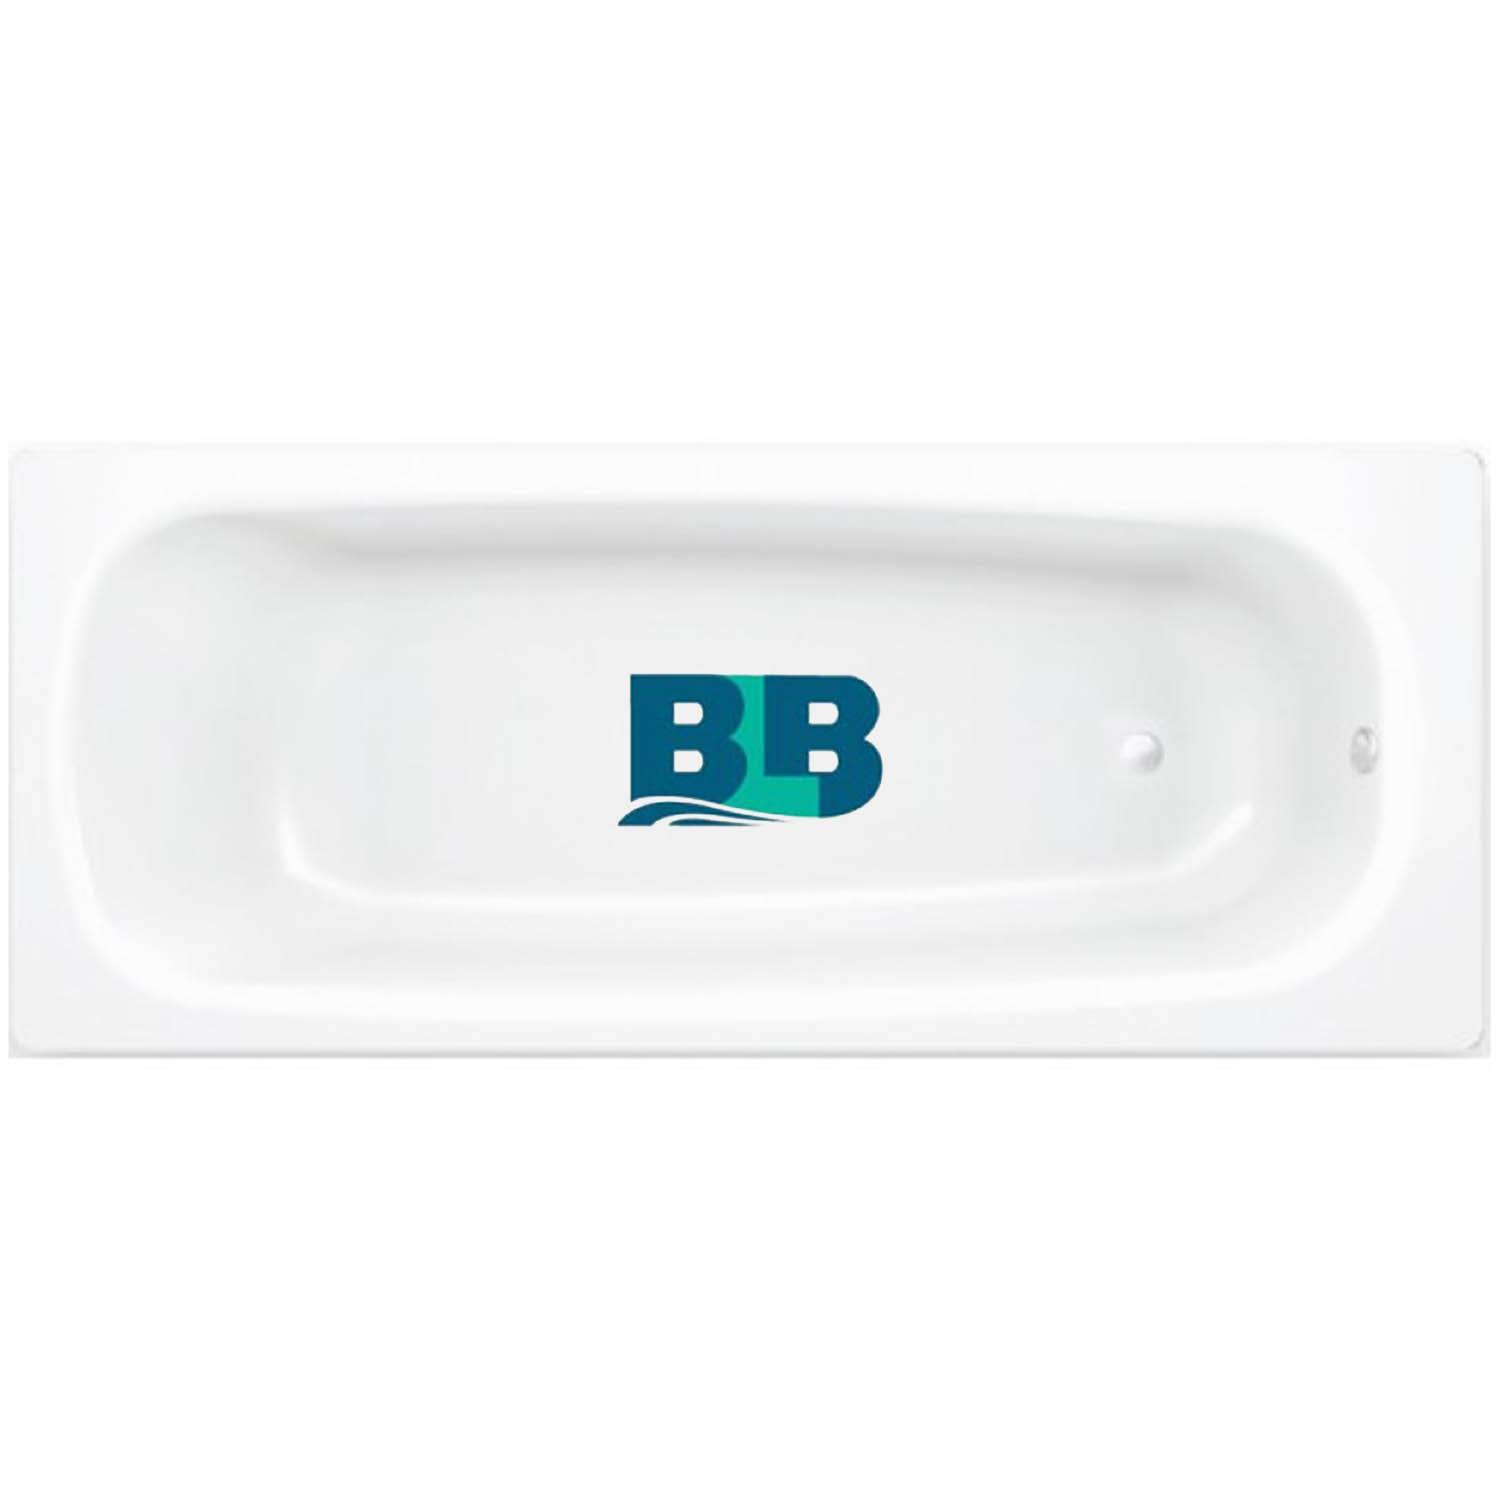 Стальная ванна blb hg. BLB apmstdbl1. Код: 211310 стальная ванна BLB Universal b70h 170x70 см, с ножками apmstdbl1. Ванна с ручками 160х70. Ванна металлическая 160х70 пена.